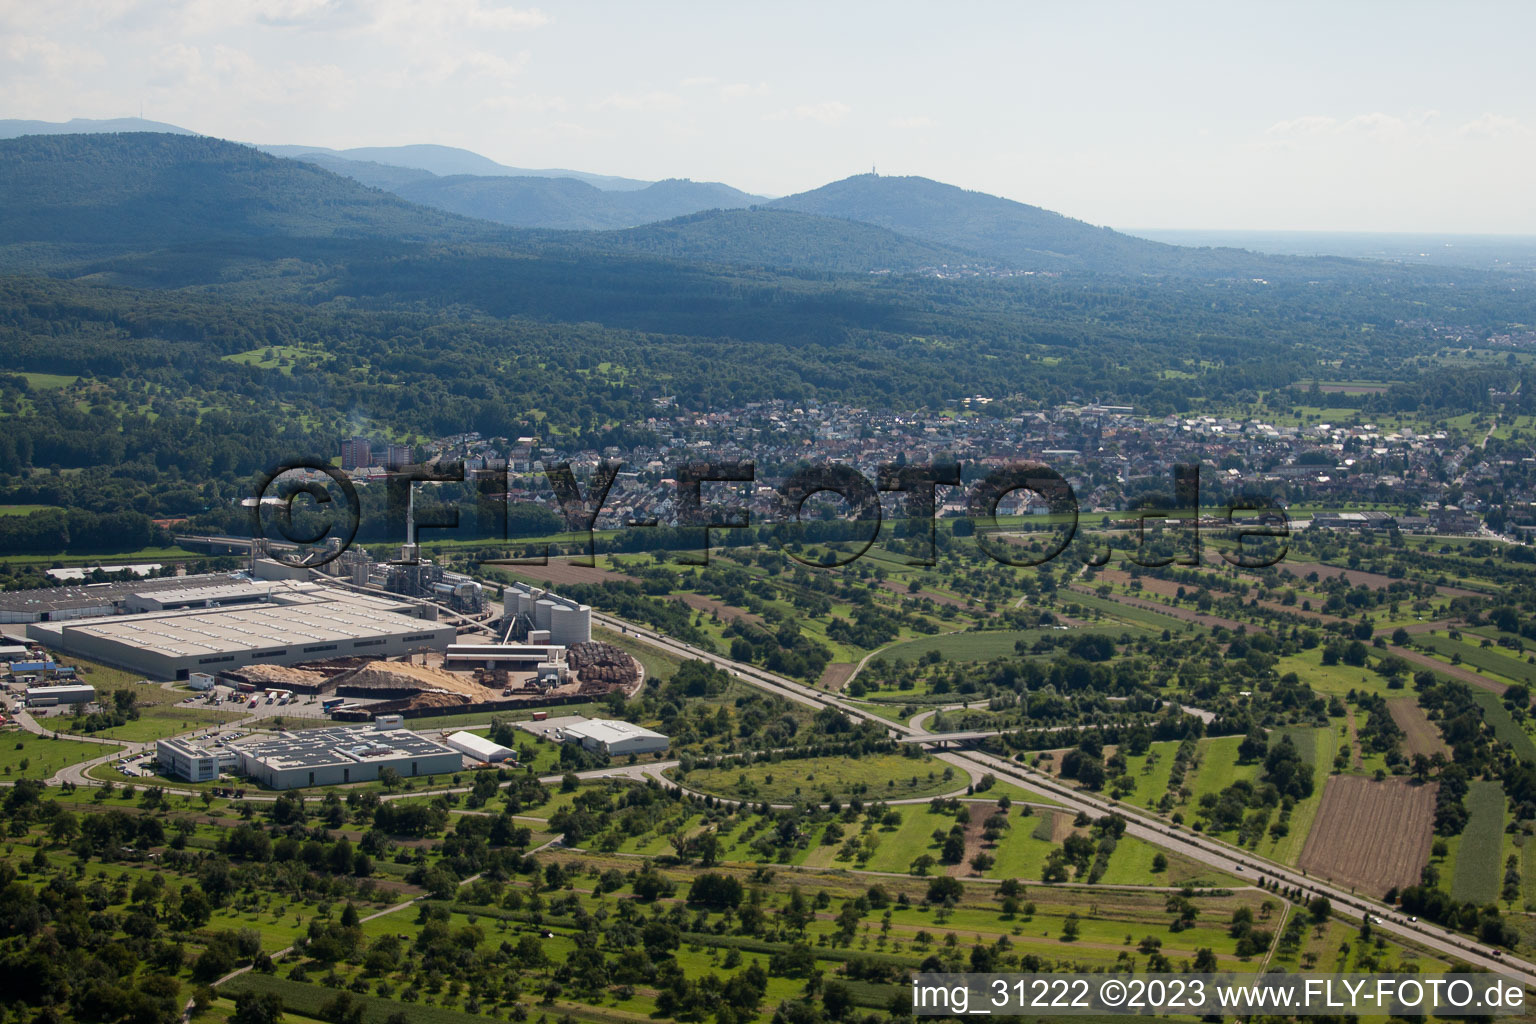 Aerial view of Kronospan GmbH in Kuppenheim in the state Baden-Wuerttemberg, Germany